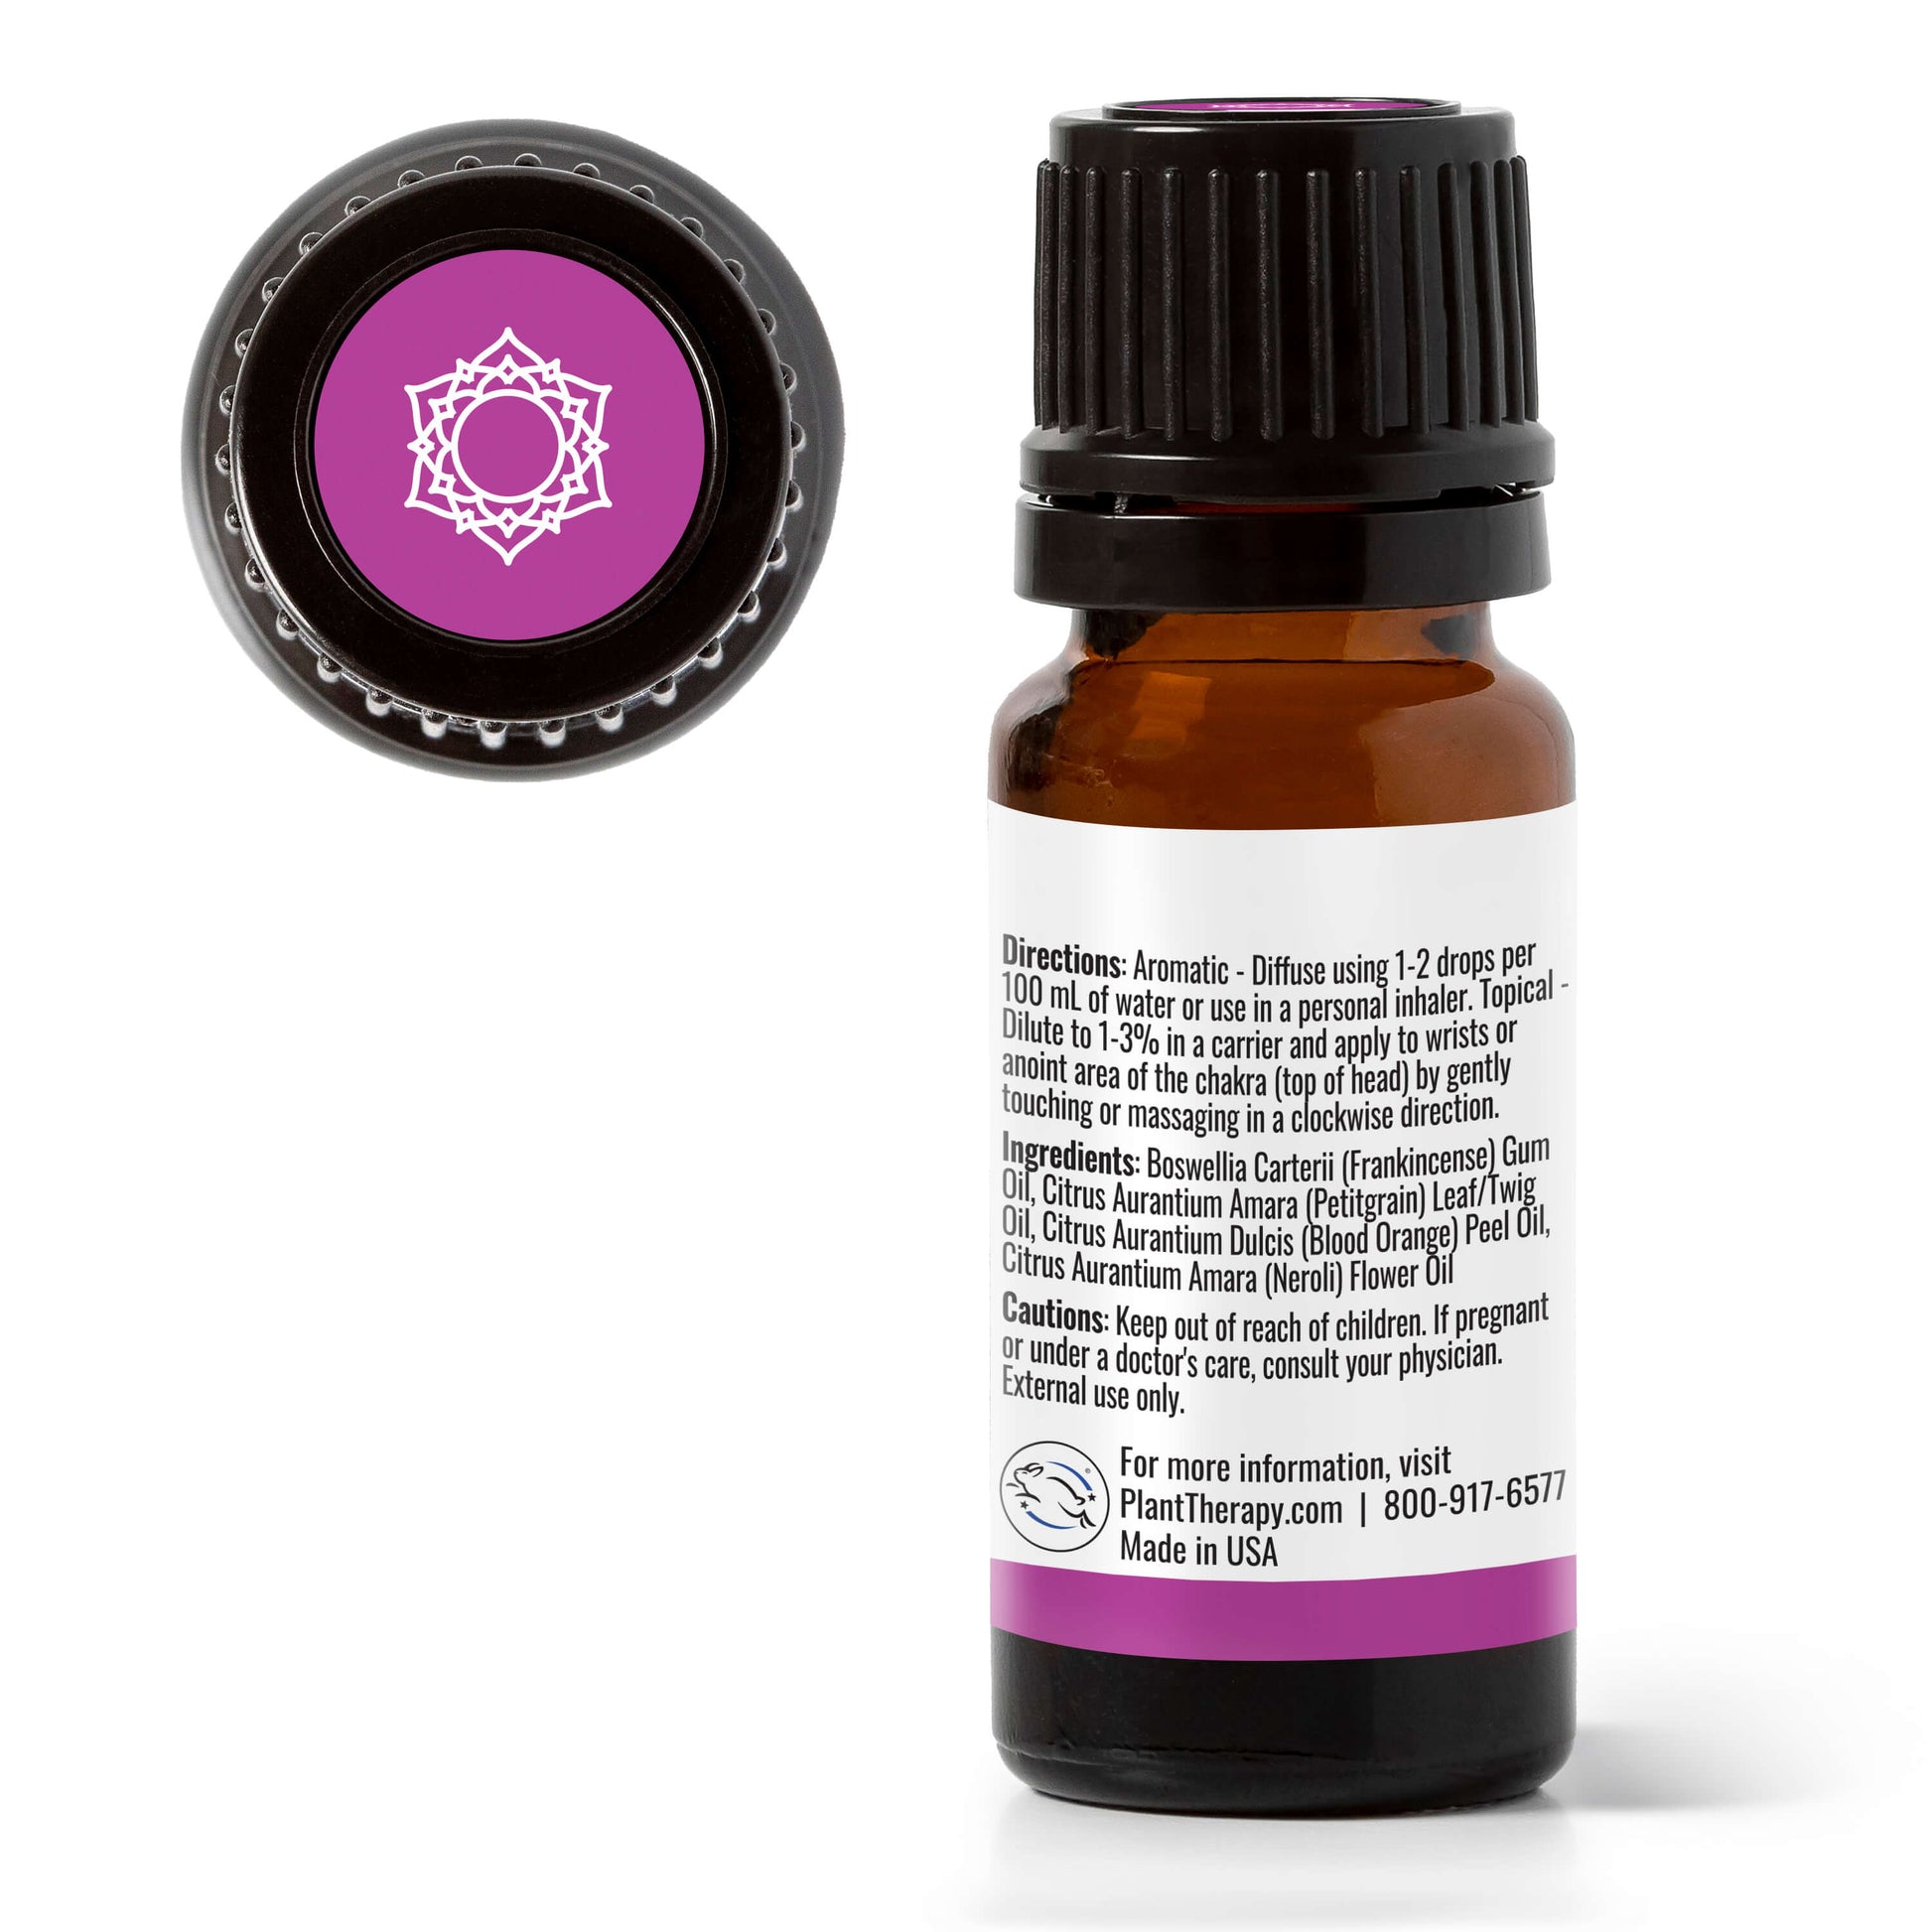 Chakra Healing Essential Oil Blend Set- 10ml - Lisa's Herbs and Oils